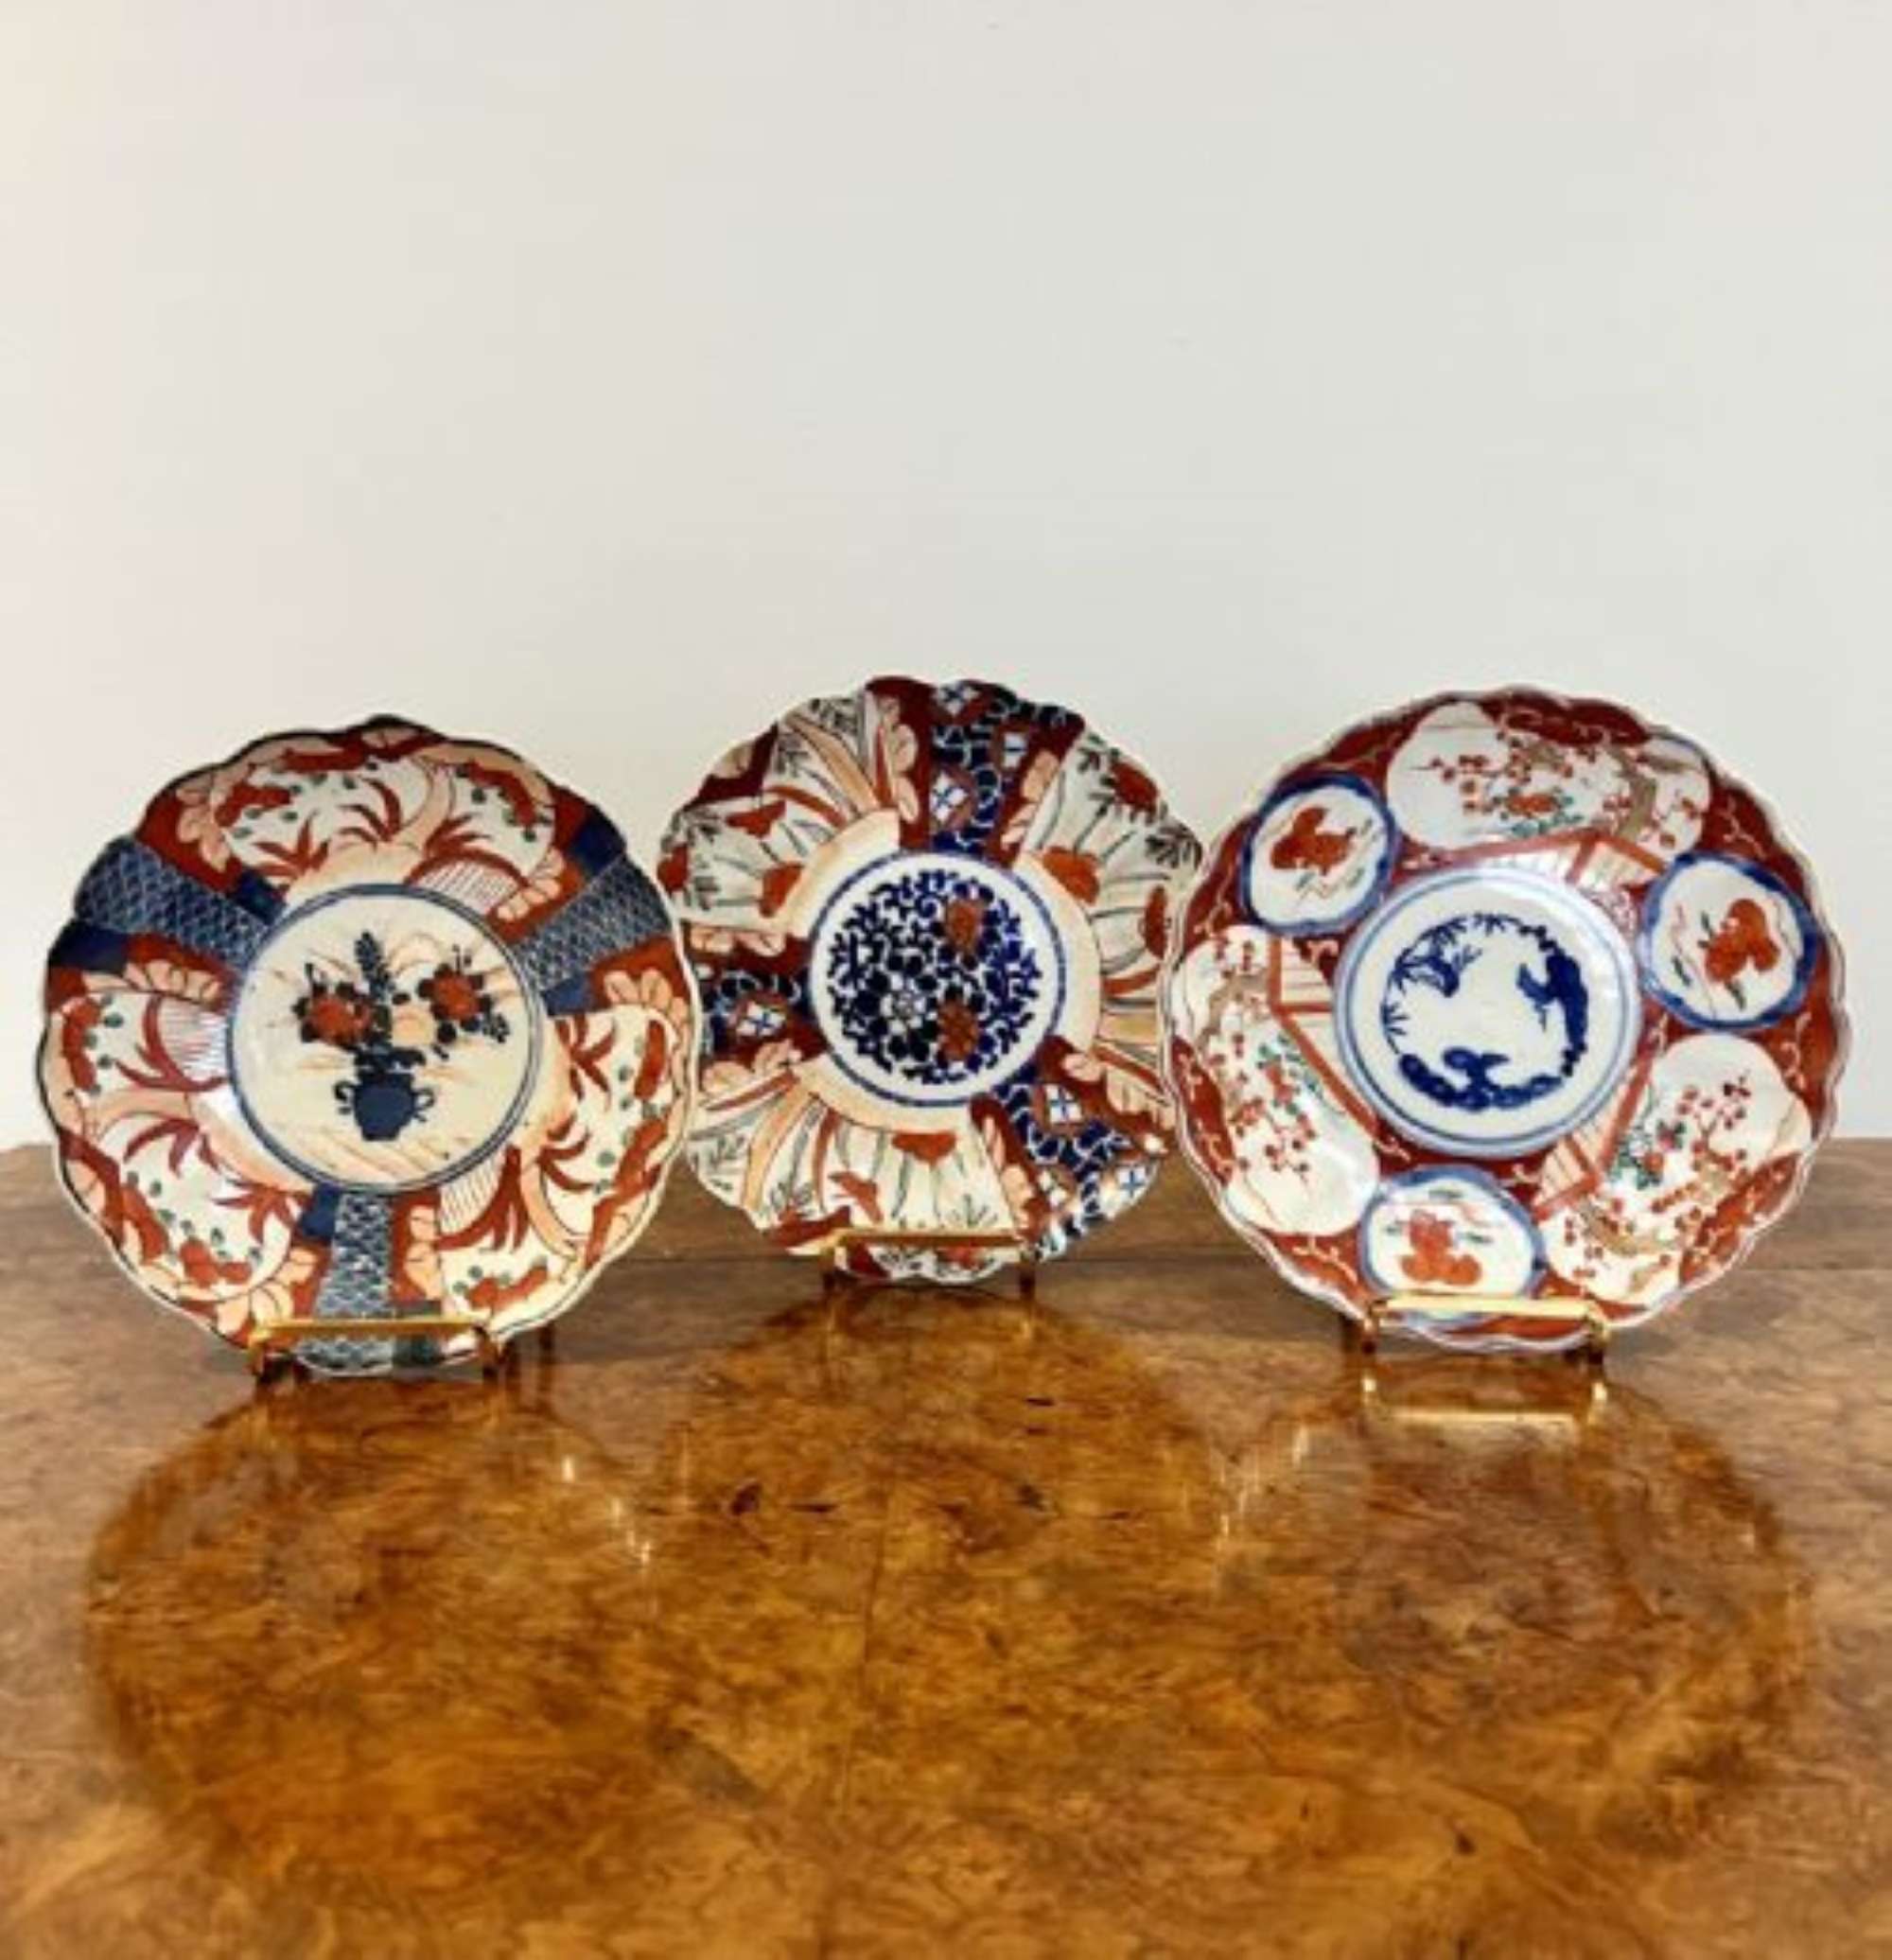 Wonderful collection of three antique Japanese imari plates